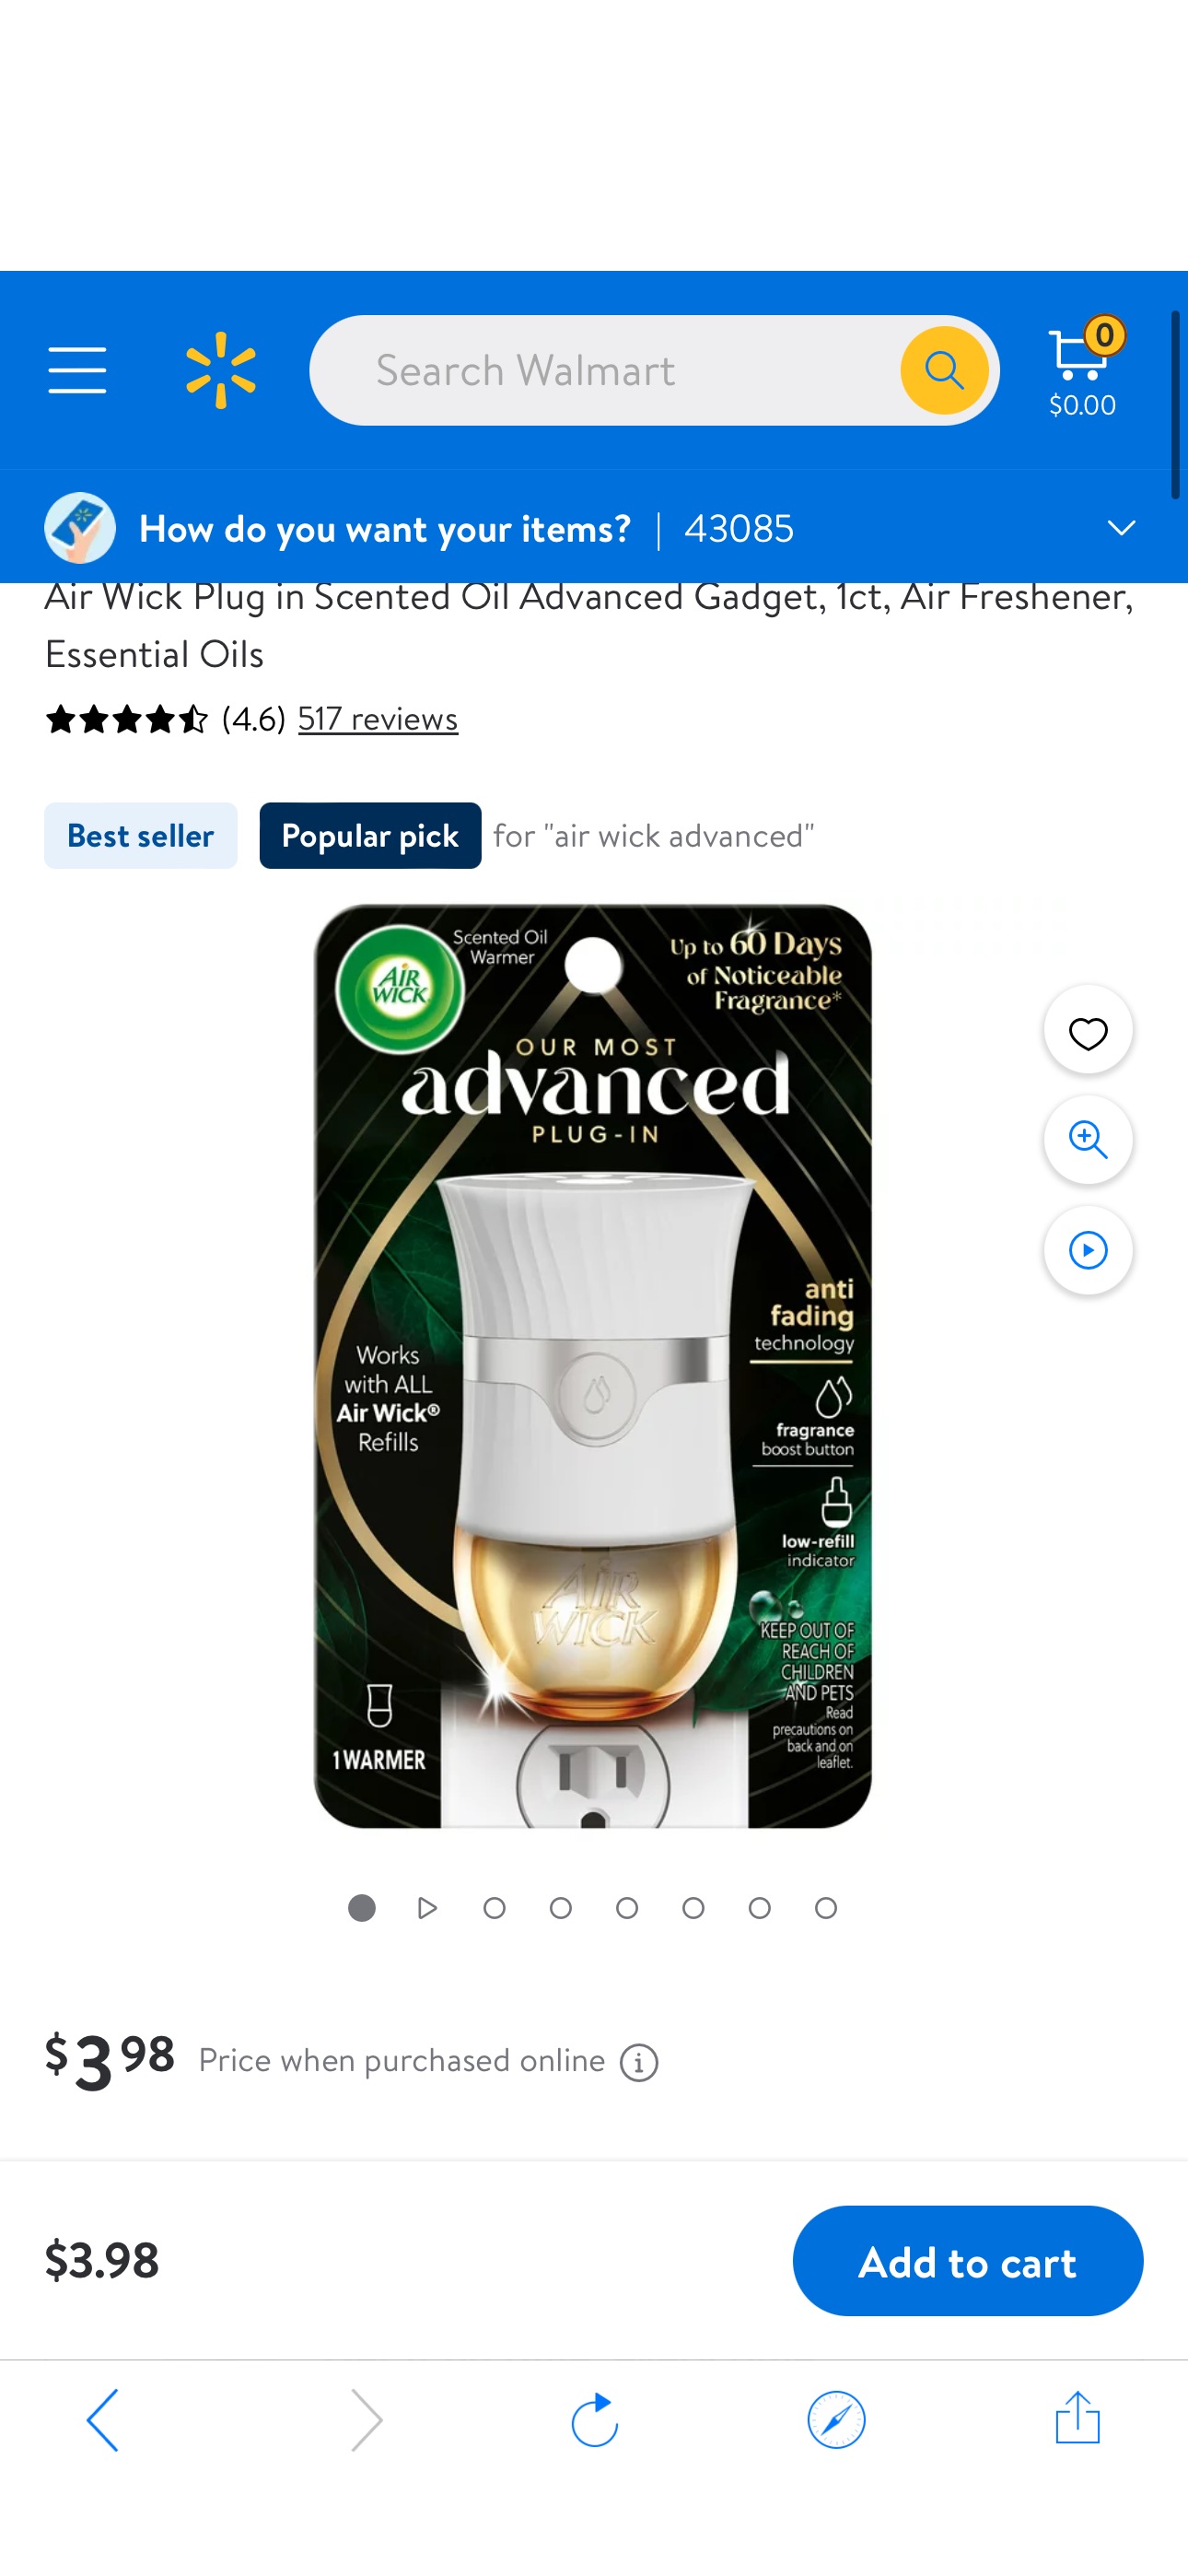 Air Wick Plug in Scented Oil Advanced Gadget, 1ct, Air Freshener, Essential Oils - Walmart.com
退现$4 Walmart cash